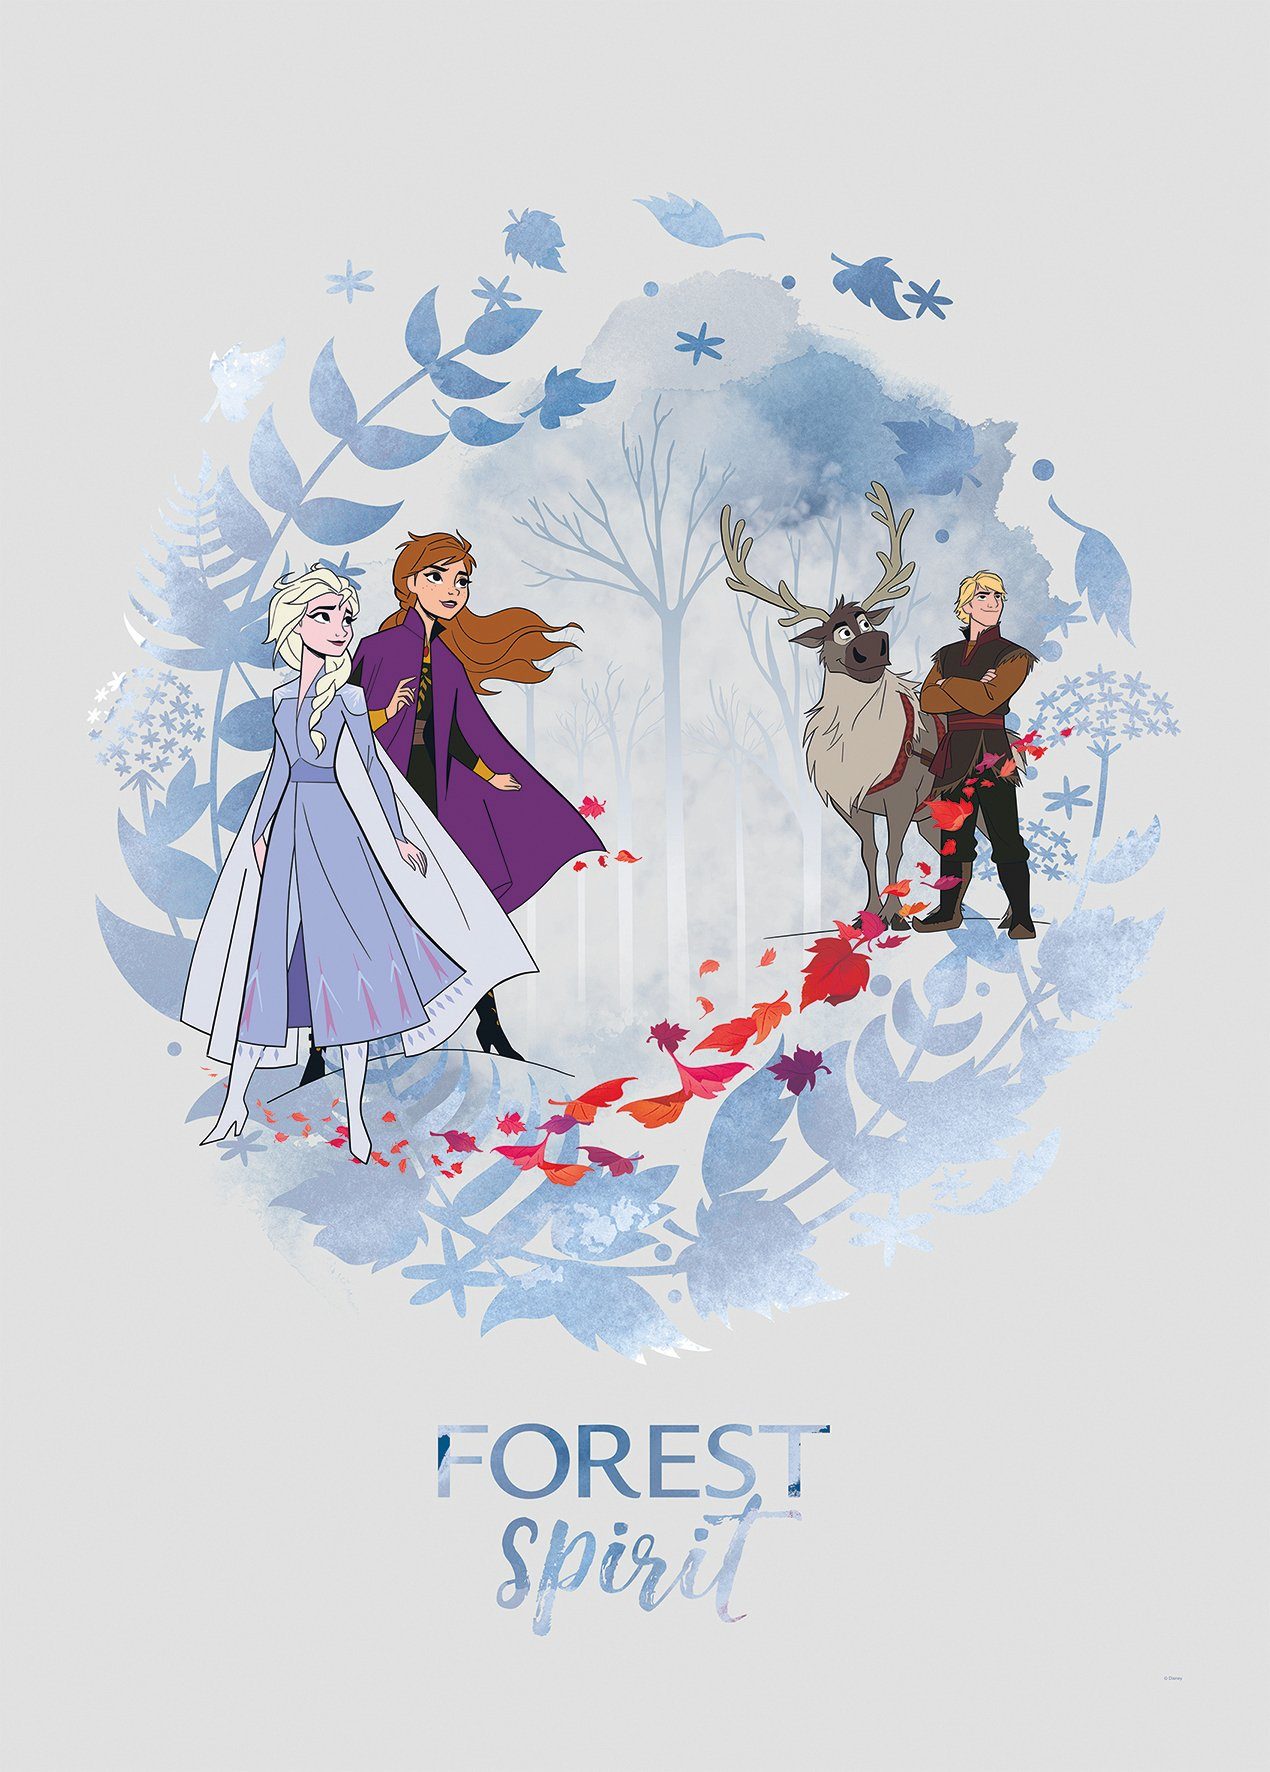 Komar Poster Frozen spirit